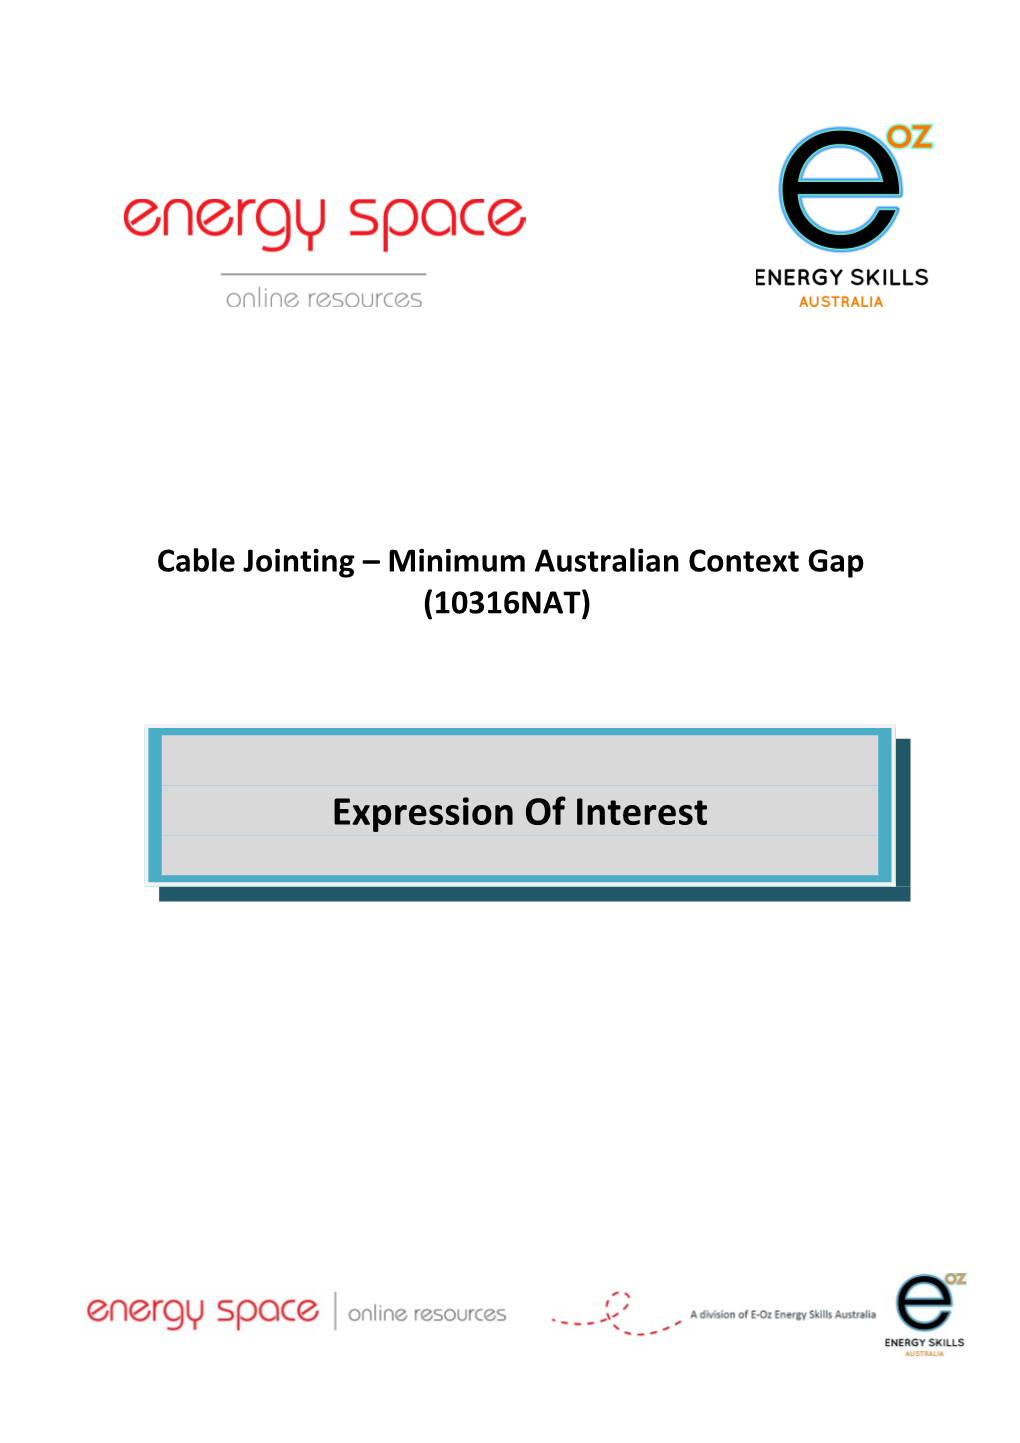 Cable Jointing Minimum Australian Context Gap